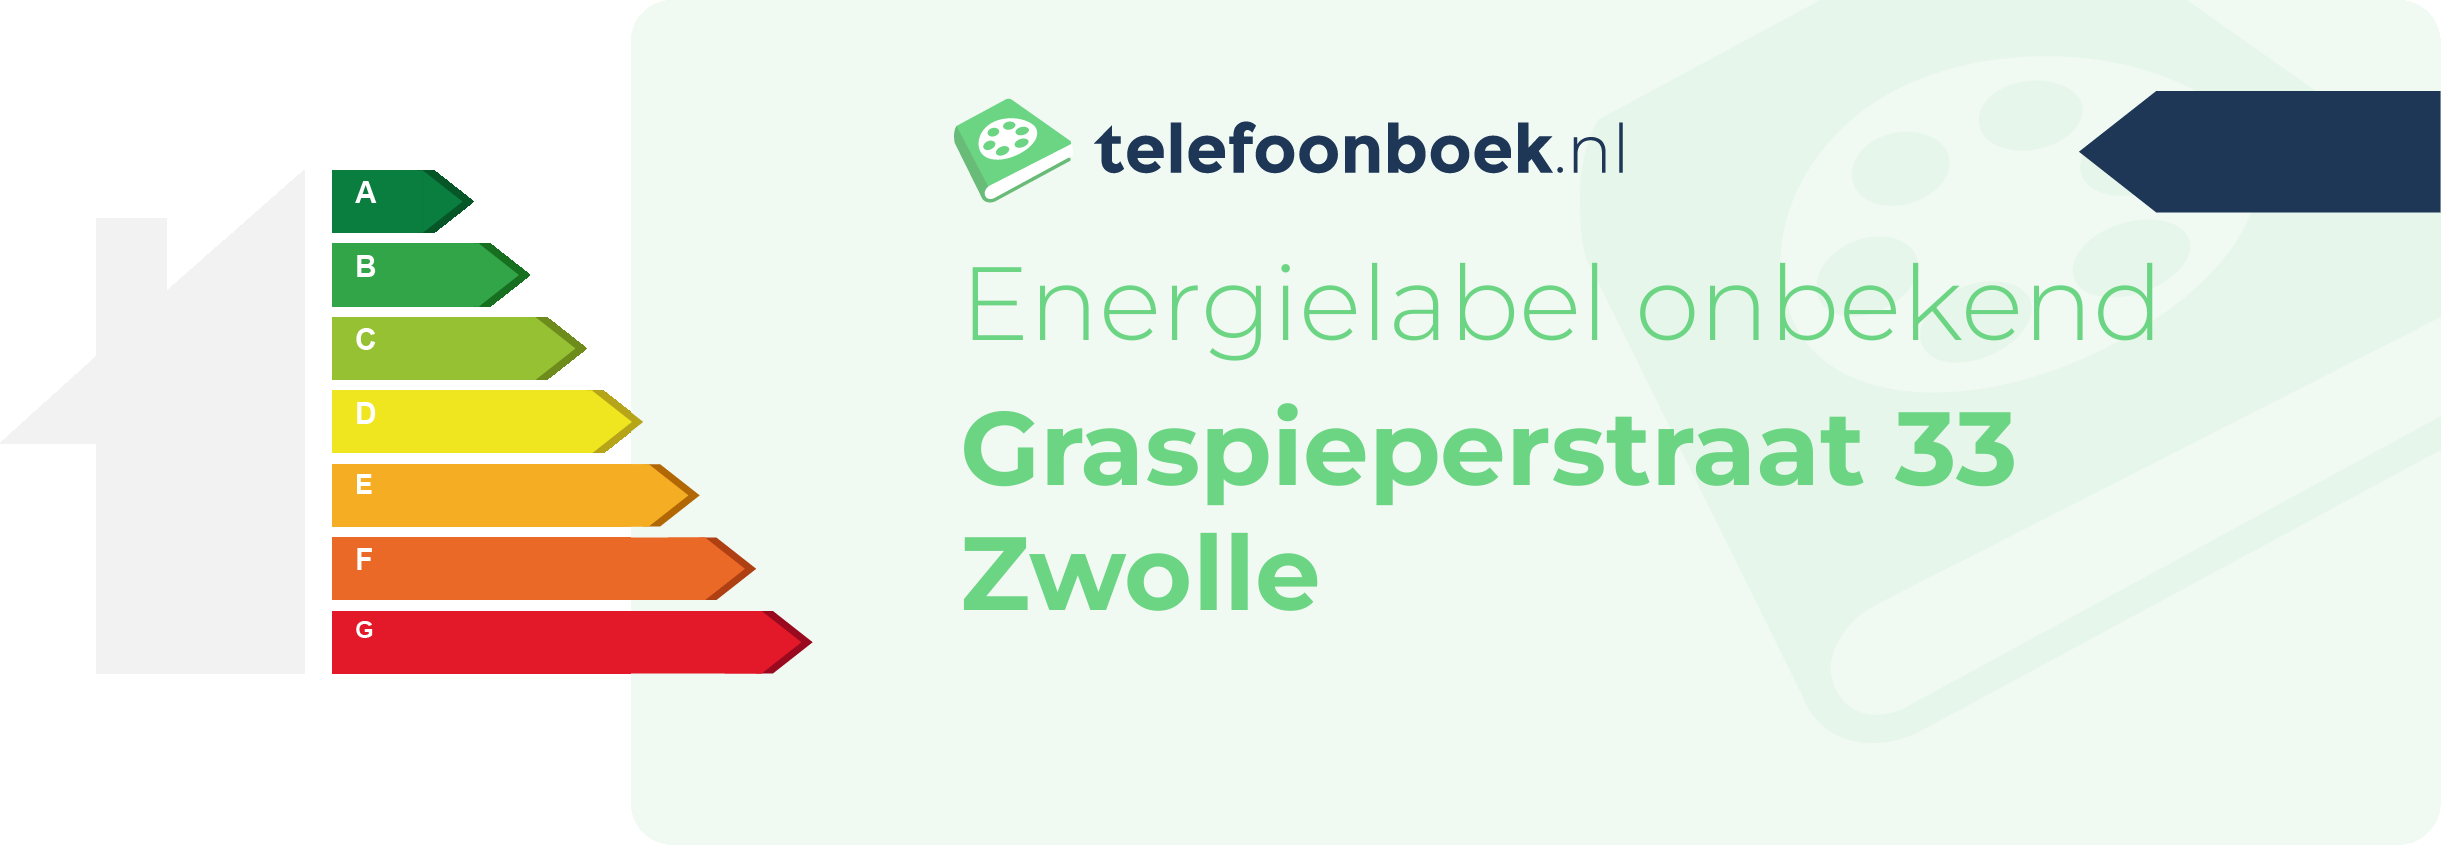 Energielabel Graspieperstraat 33 Zwolle